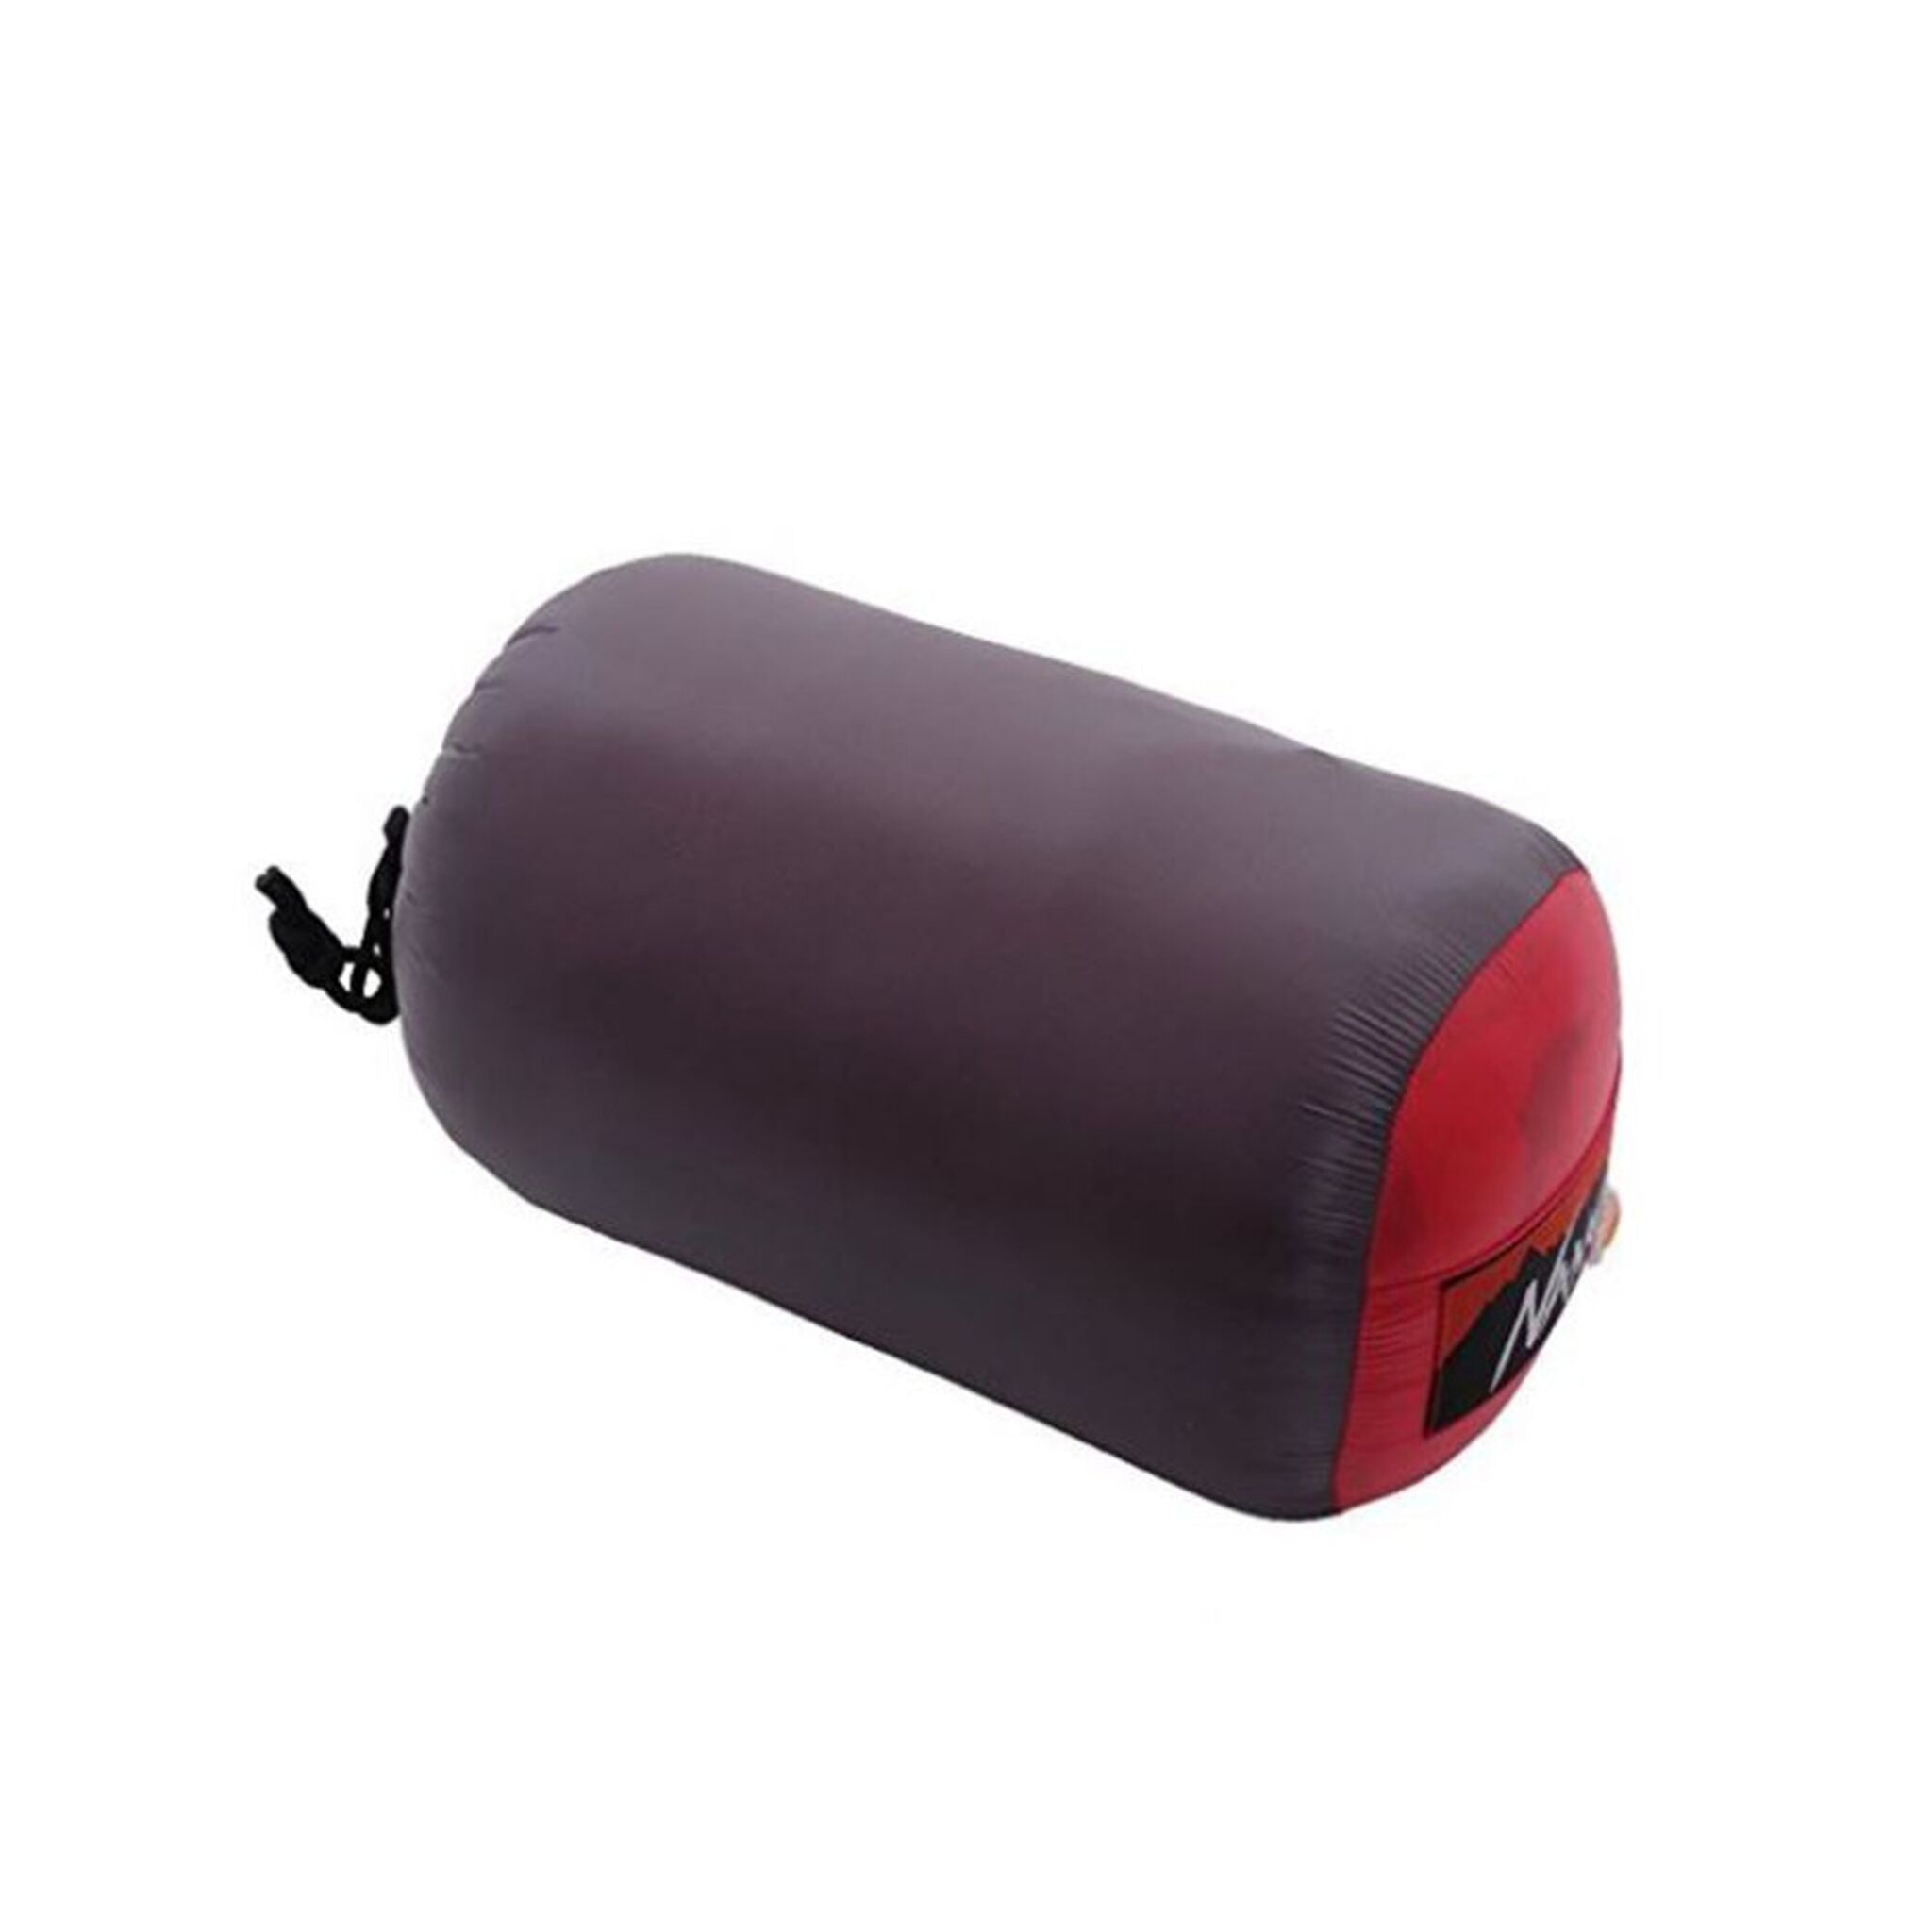 【Nanga】UDD 380 防潑水羽絨睡袋 / 一般  紅色 NA24338